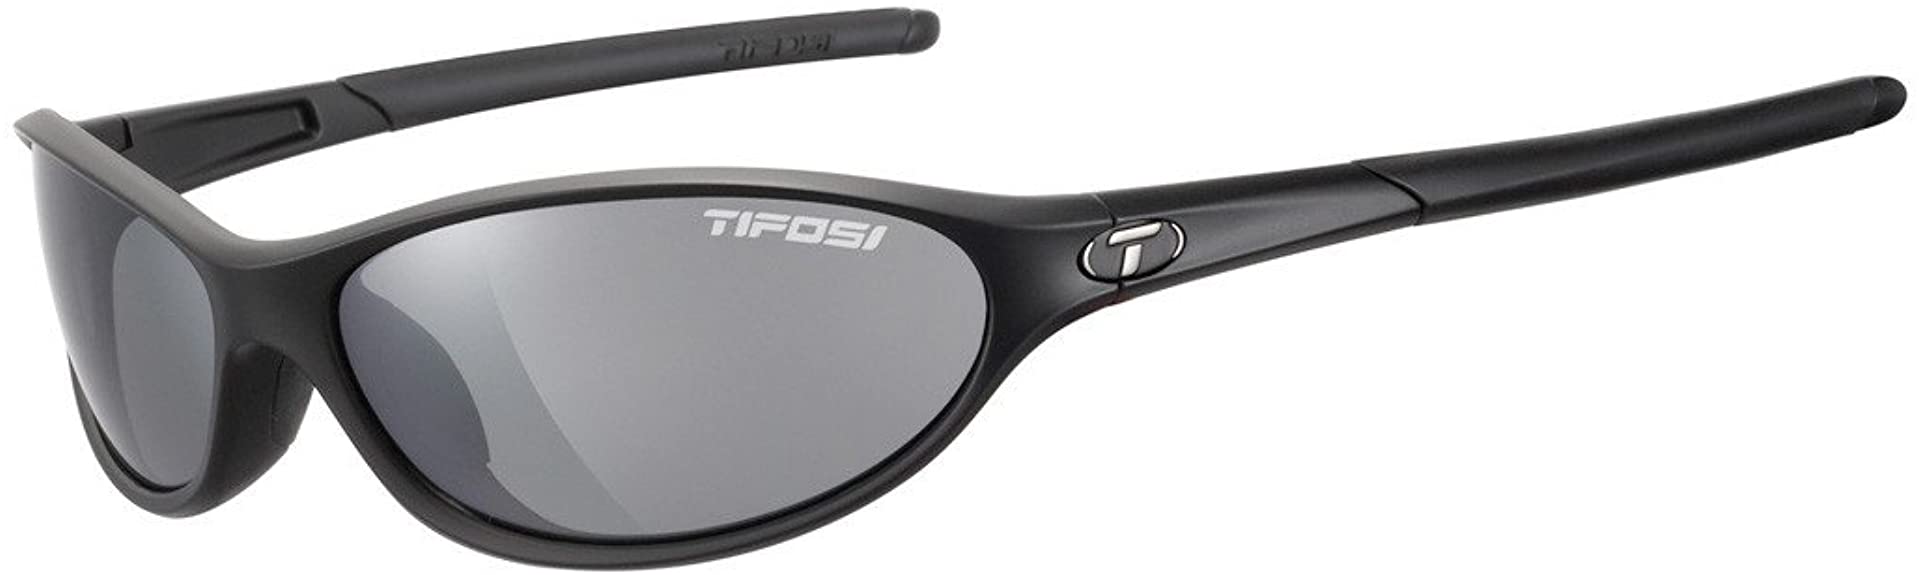 Tifosi Womens Alpe 2.0 Single Lens Golf Sunglasses